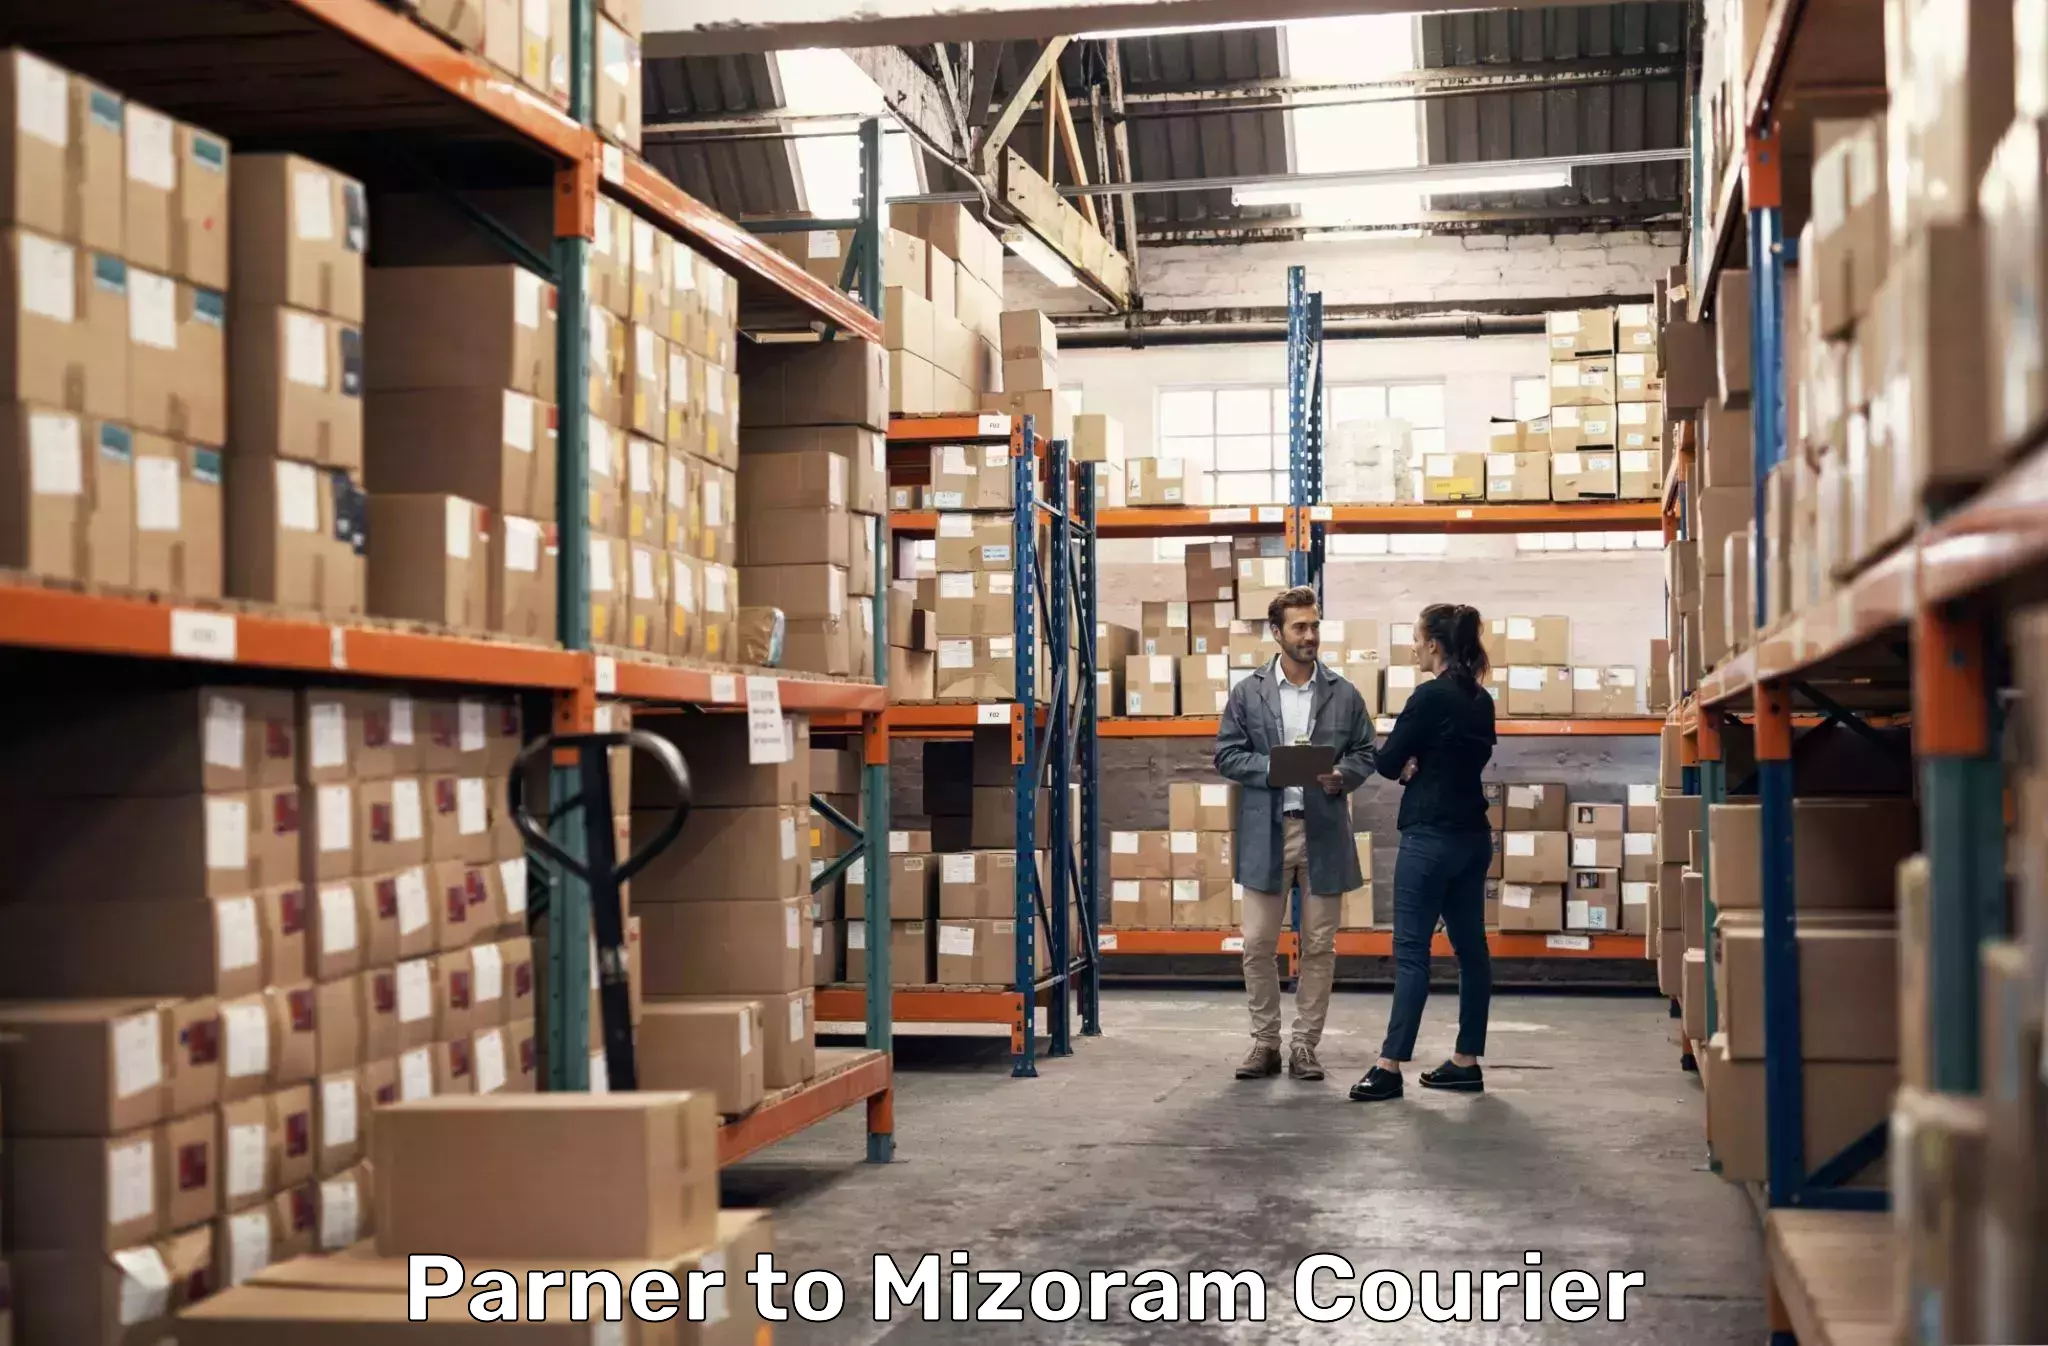 Diverse delivery methods Parner to Mizoram